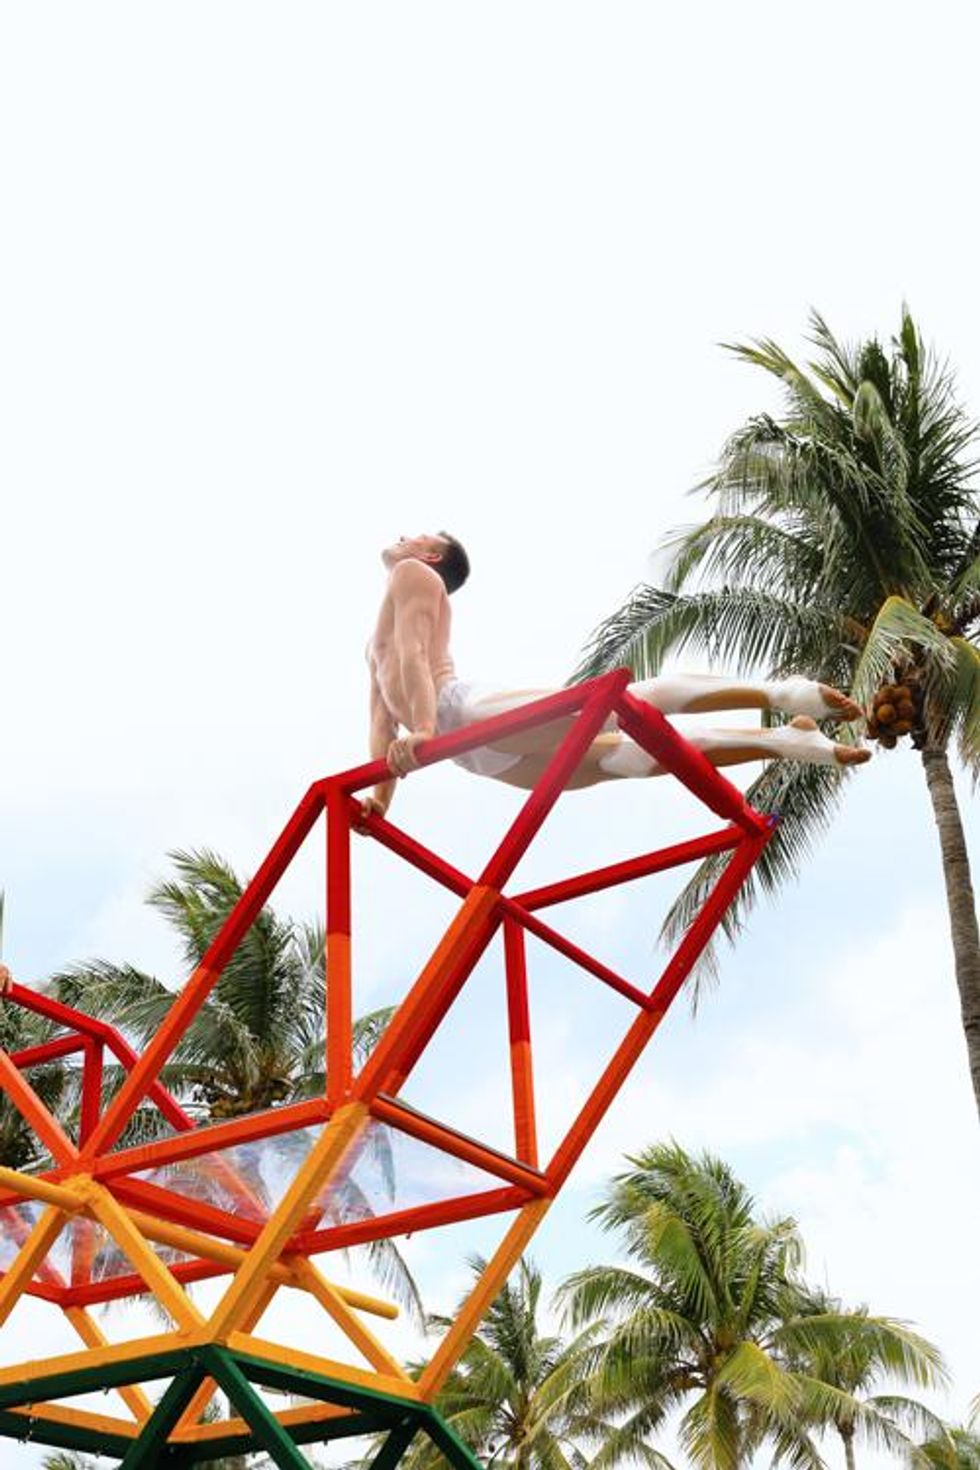 Celebrity Cruises Heats Up Miami Beach Gay Pride